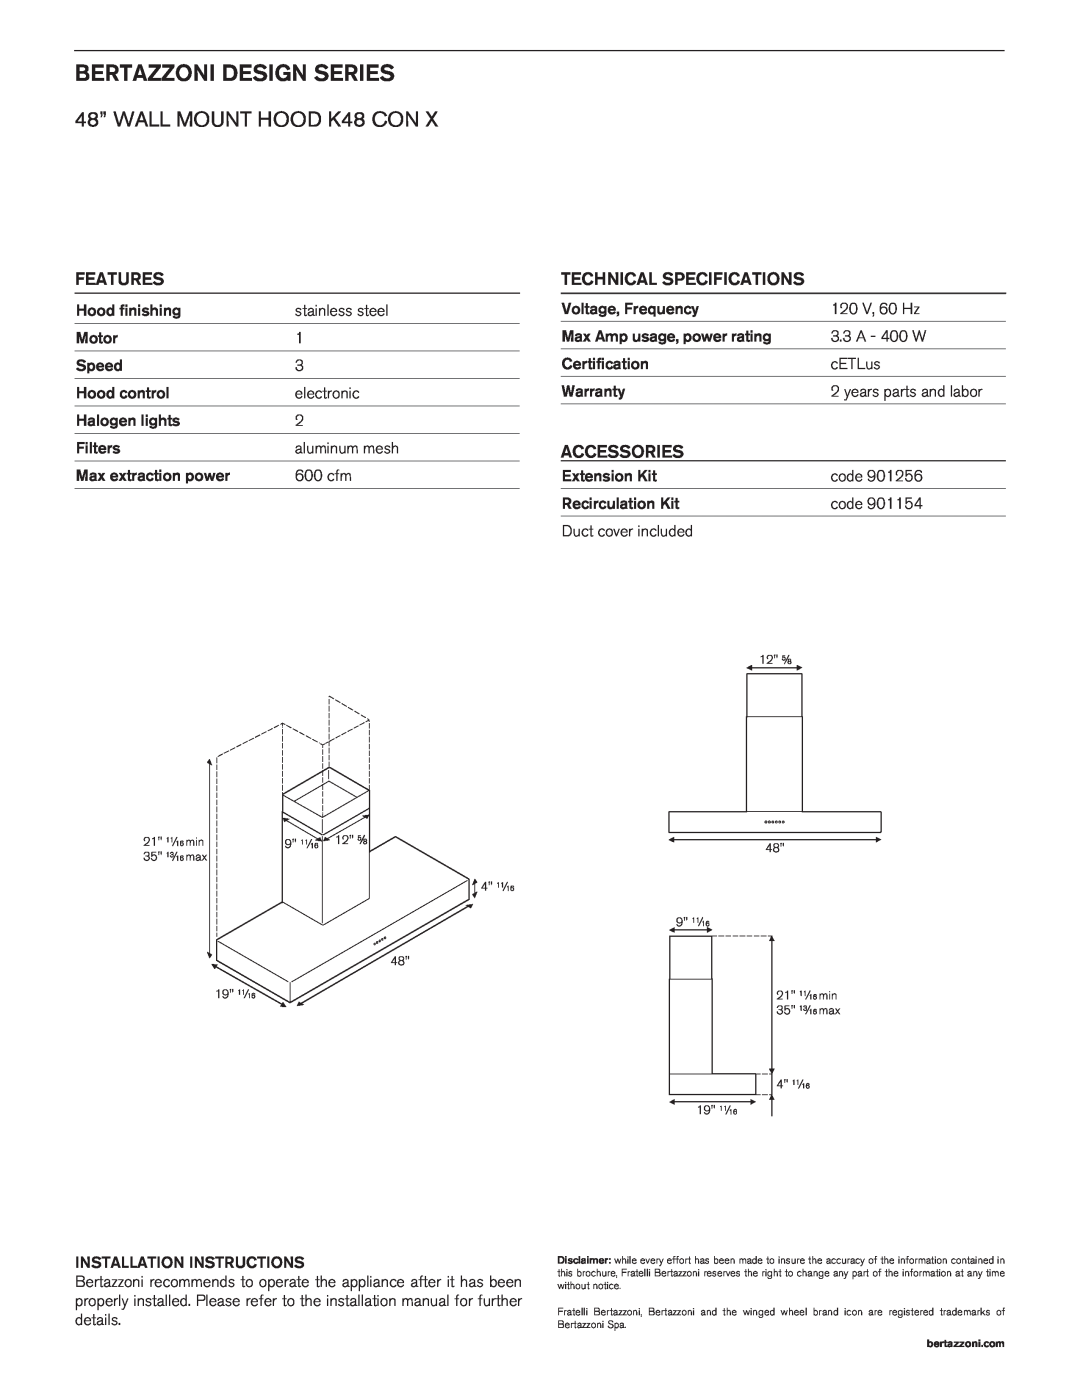 Bertazzoni K48 CON X manual Bertazzoni Design Series, 48” Wall mount hood K48 CON, Features, Technical Specifications 